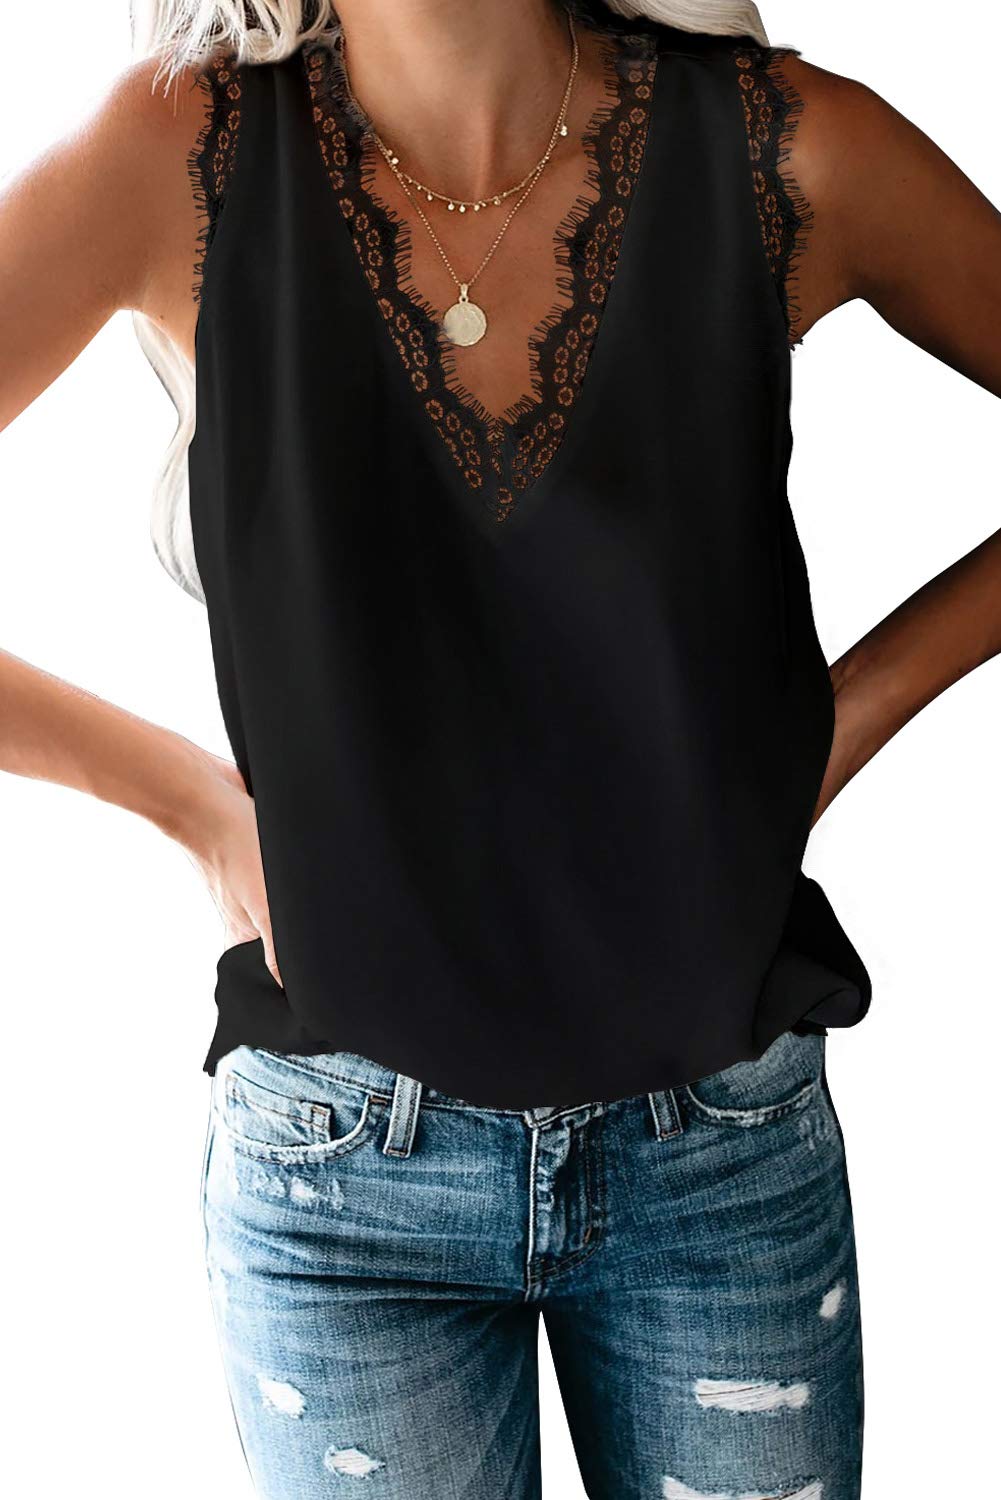 BLENCOT Women Lace Trim Tank Tops V Neck Fashion Casual Sleeveless Blouse Vest Shirts